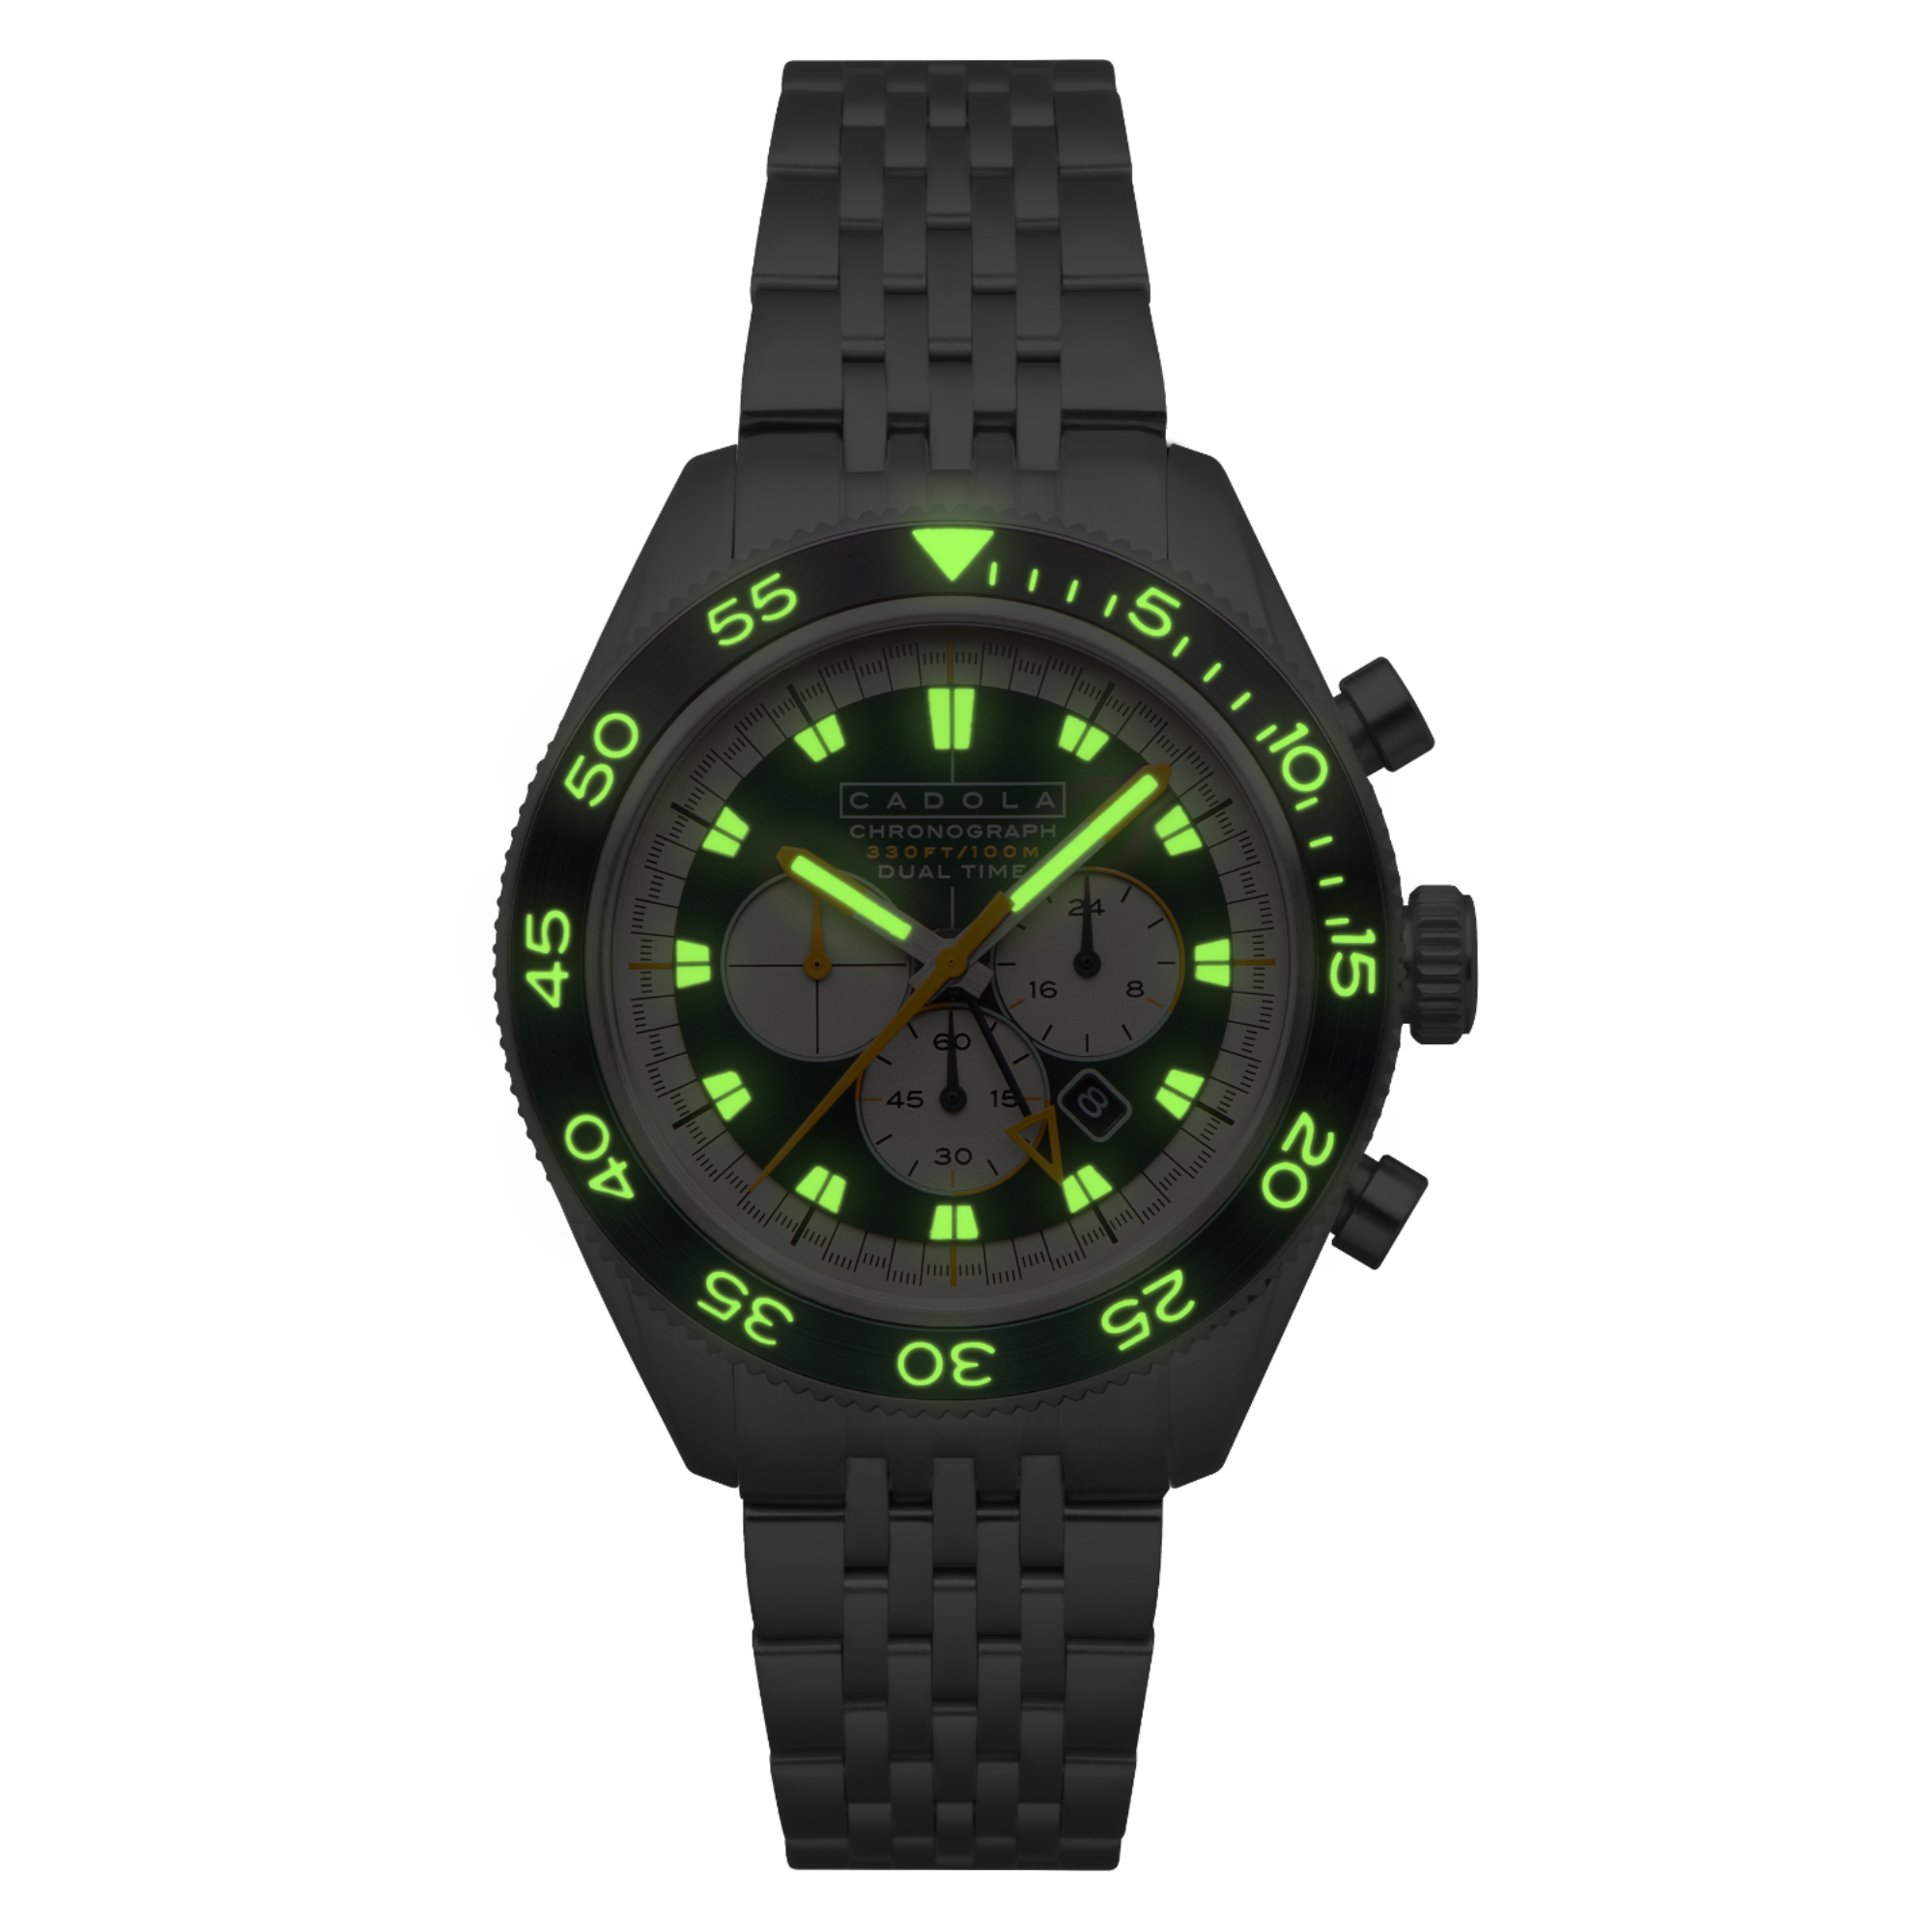 Cadola Cadola Ahrens Chronograph Racing Green Men's Limited Edition Watch CD-1036-11